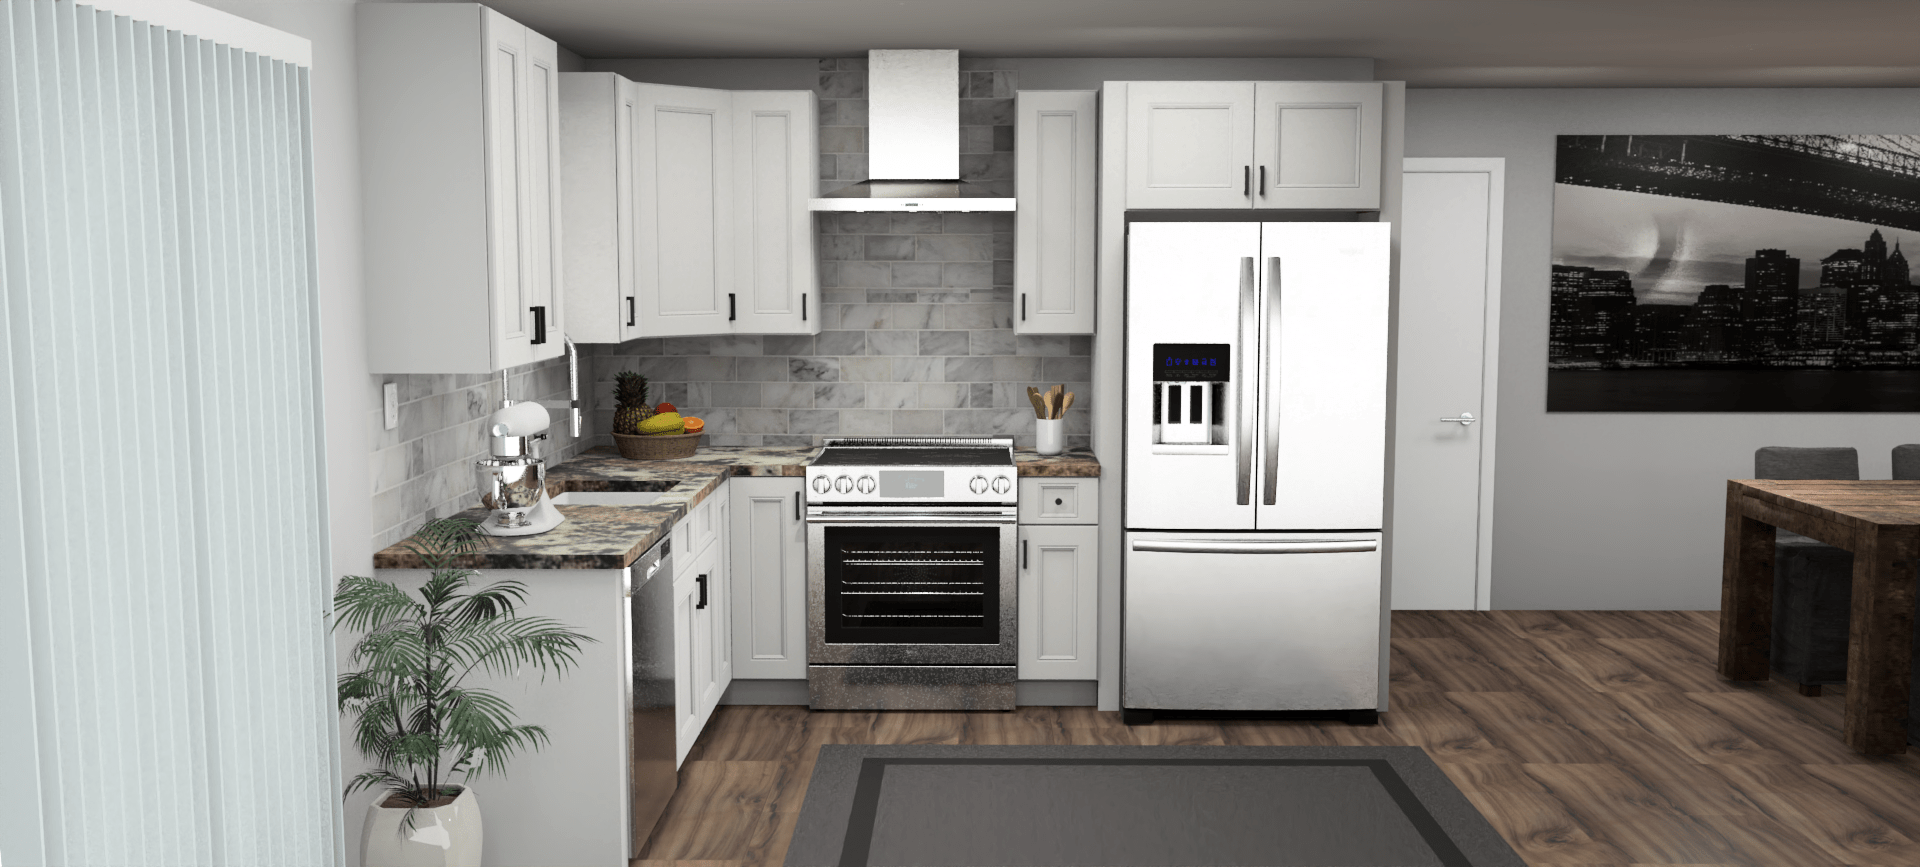 Fabuwood Allure Nexus Frost 8 x 10 L Shaped Kitchen Front Layout Photo